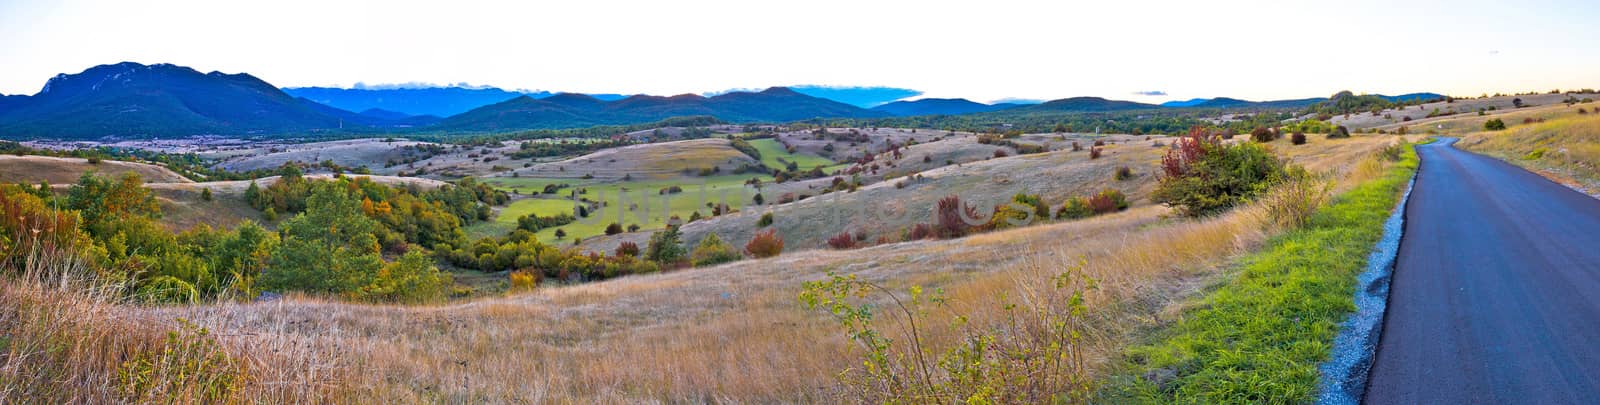 Autumn landscape of Lika region paoramic view, rural Croatia